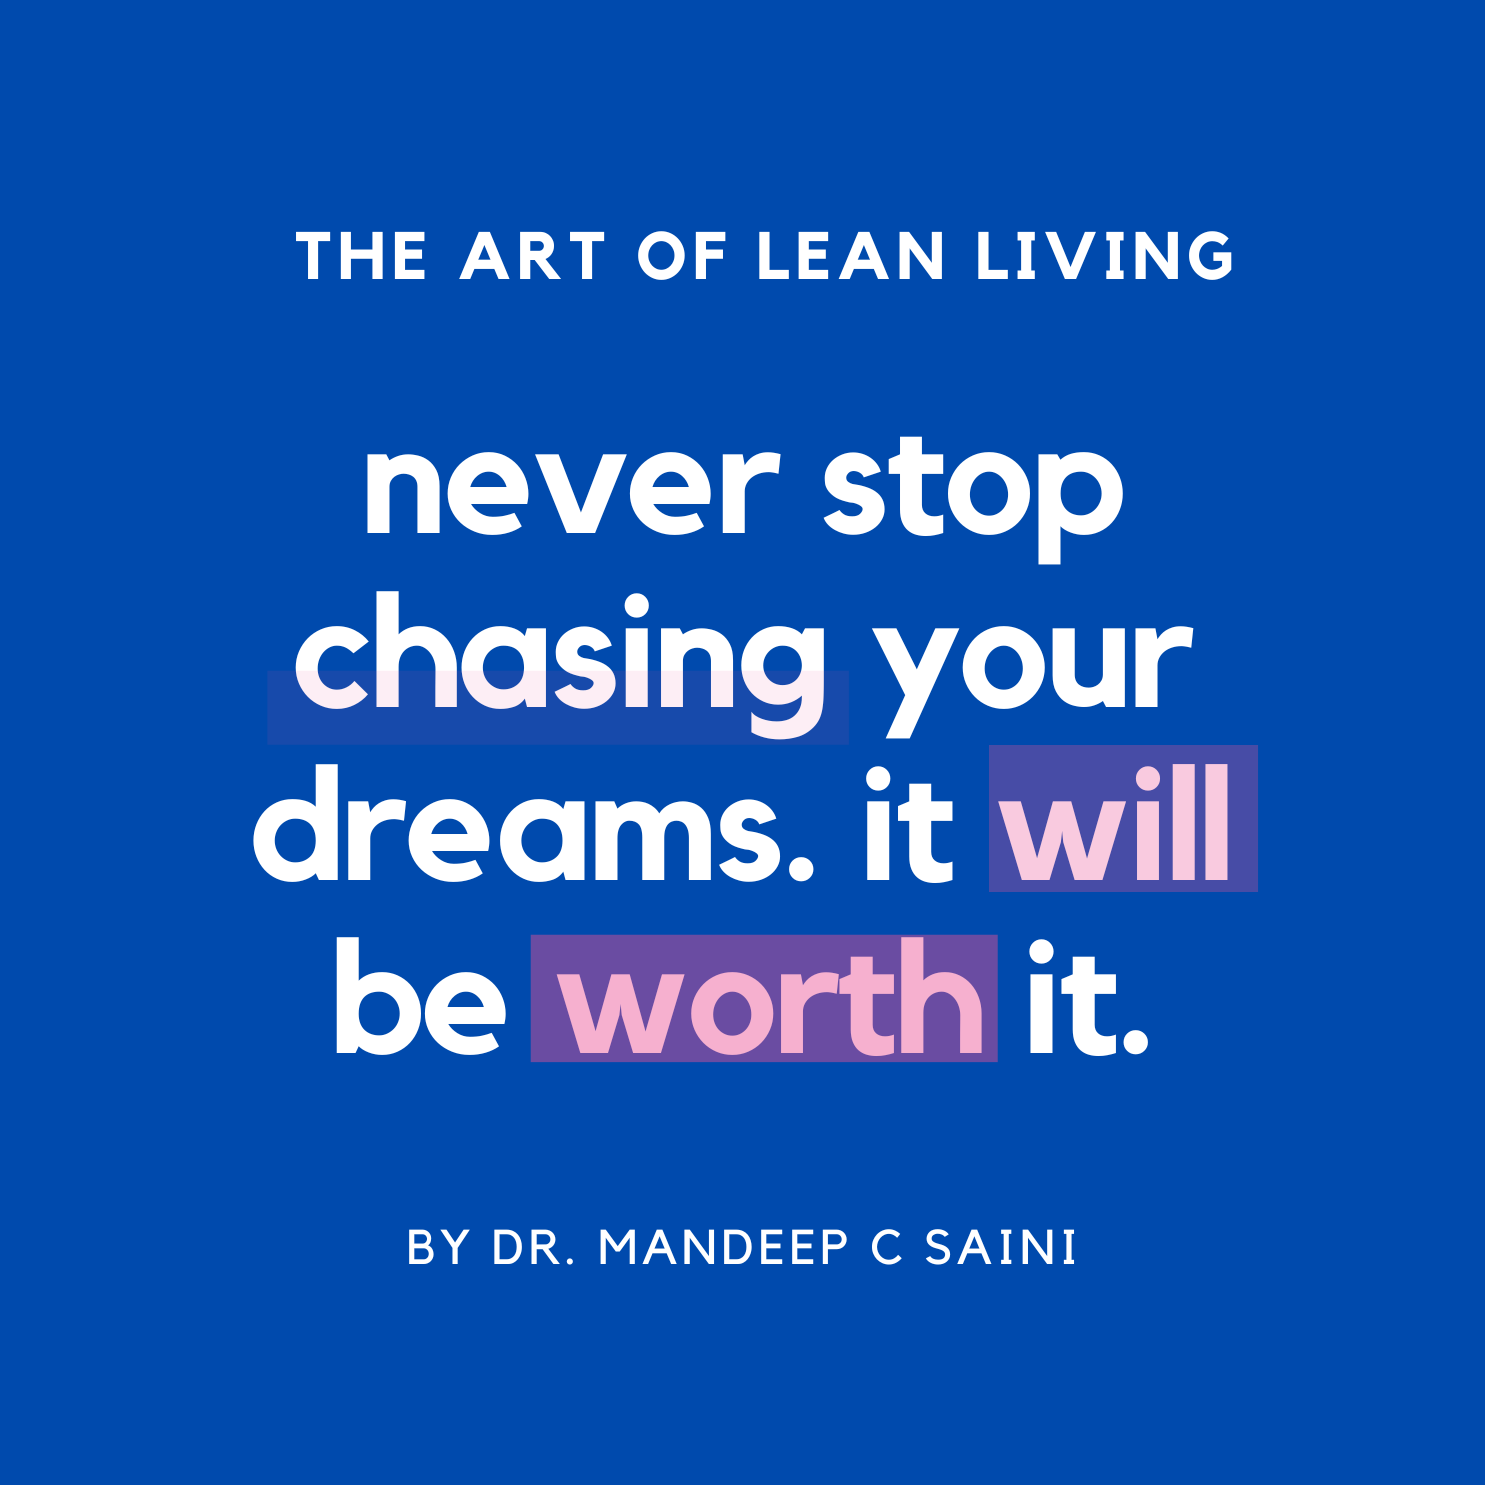 The art of lean living. Mandeepsaini.com